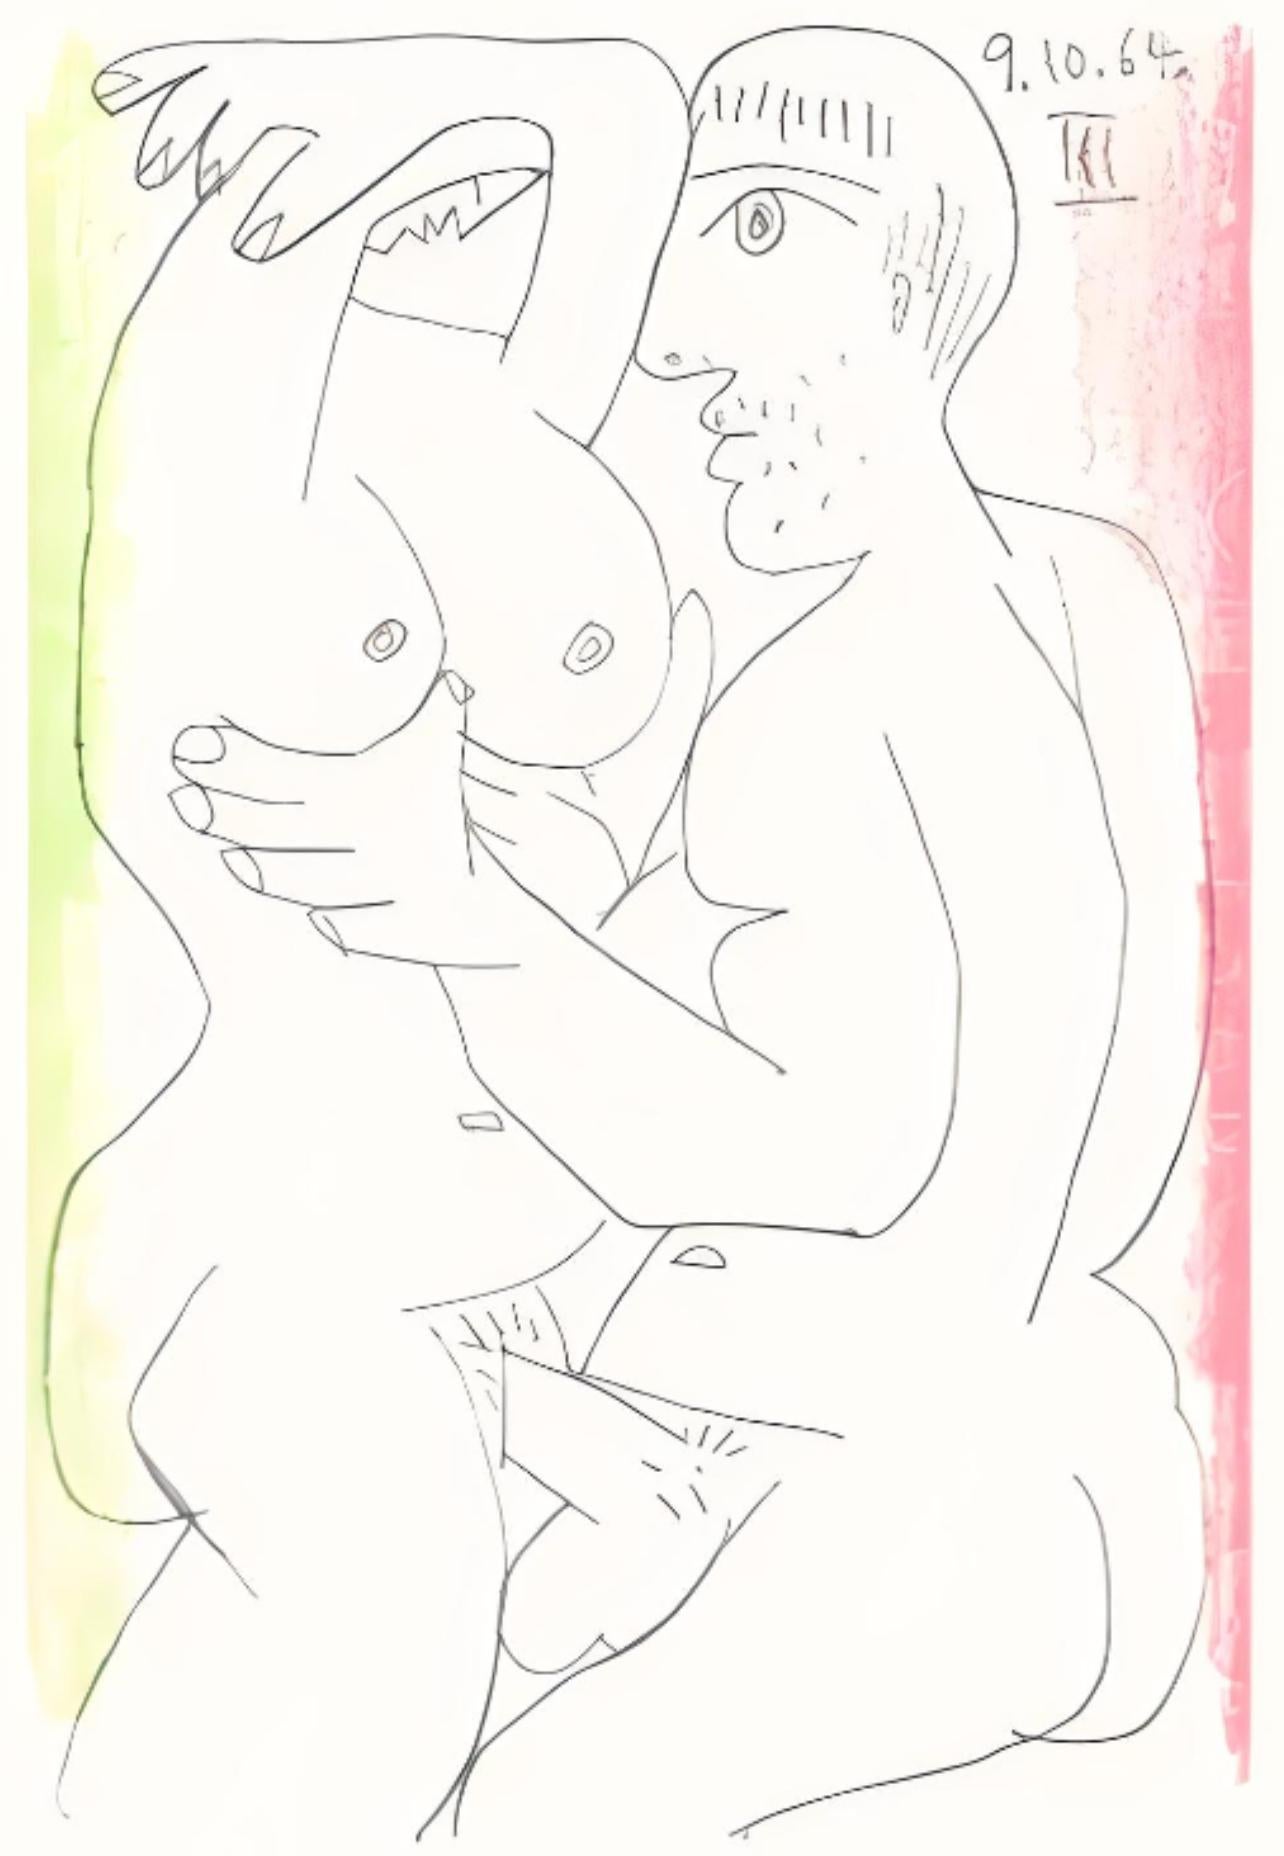 Picasso, Le Goût du Bonheur 70 (Cramer 148; Bloch 2013) (after)